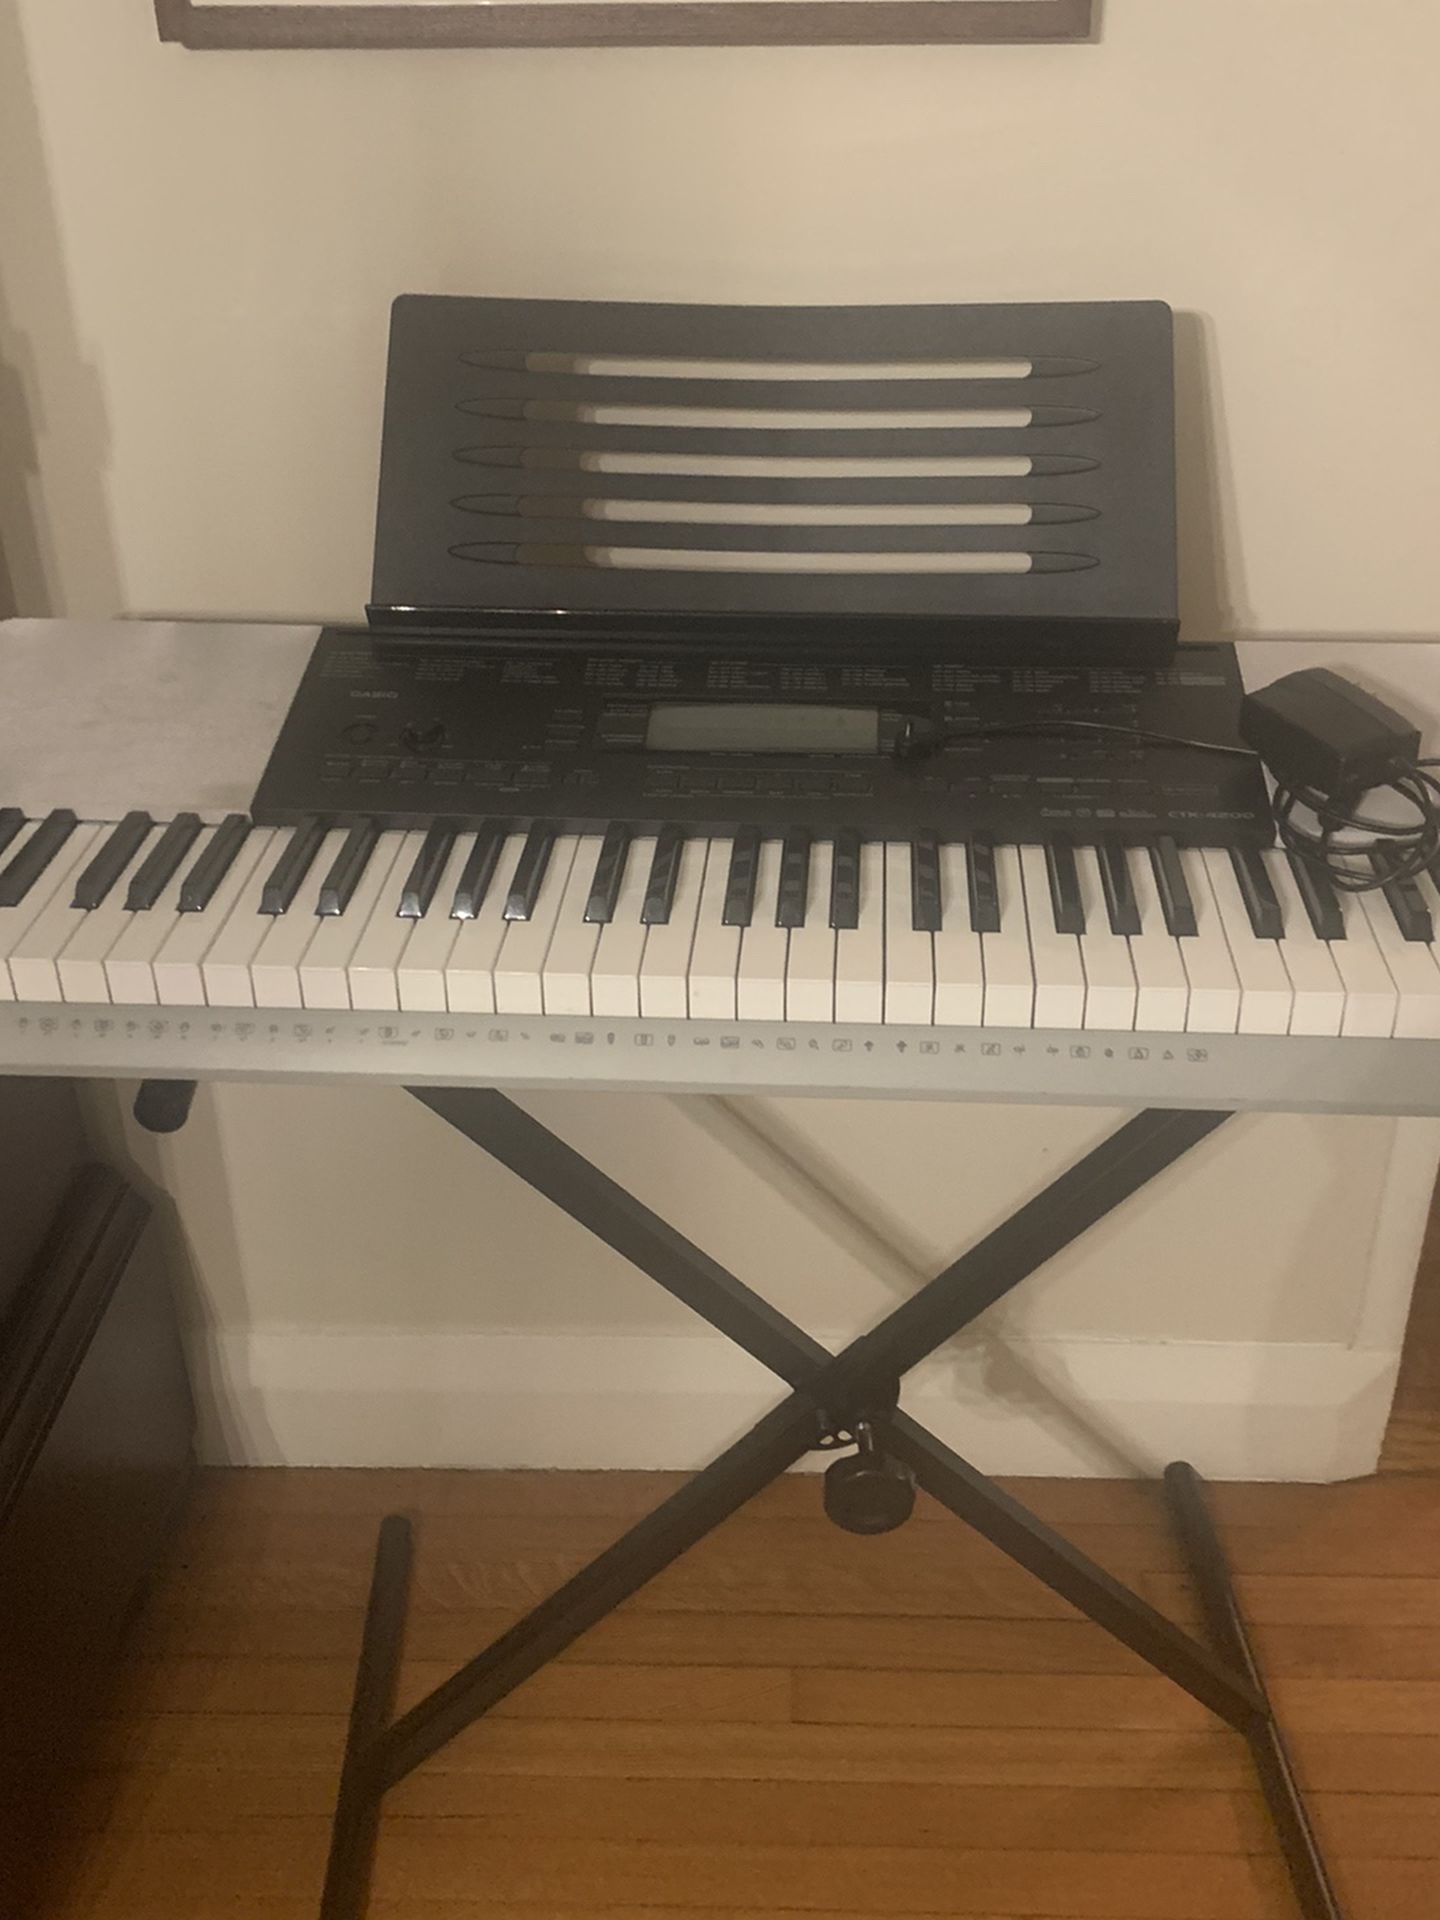 Casio Keyboard - Great Starter Piano